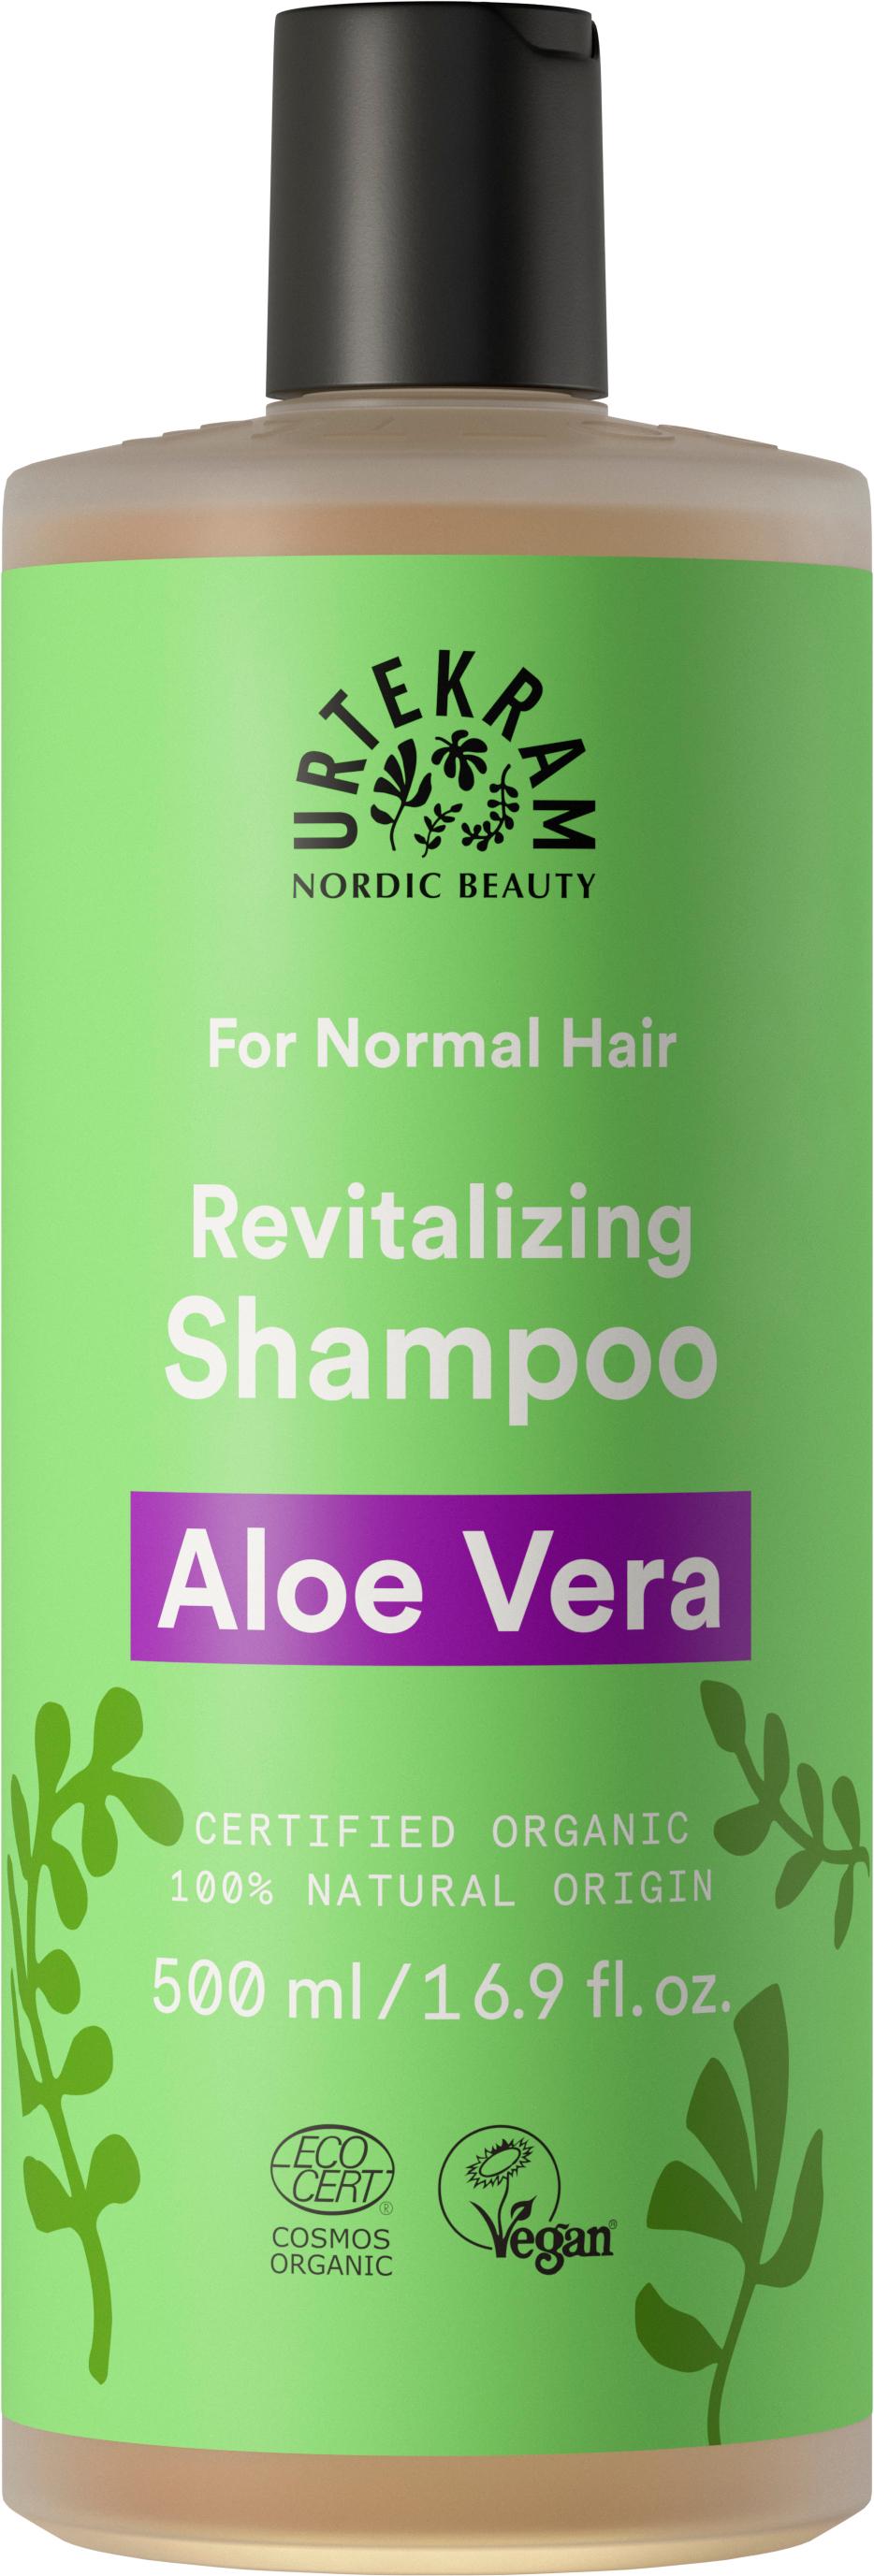 Urtekram Aloe Vera Shampoo | 500 ml